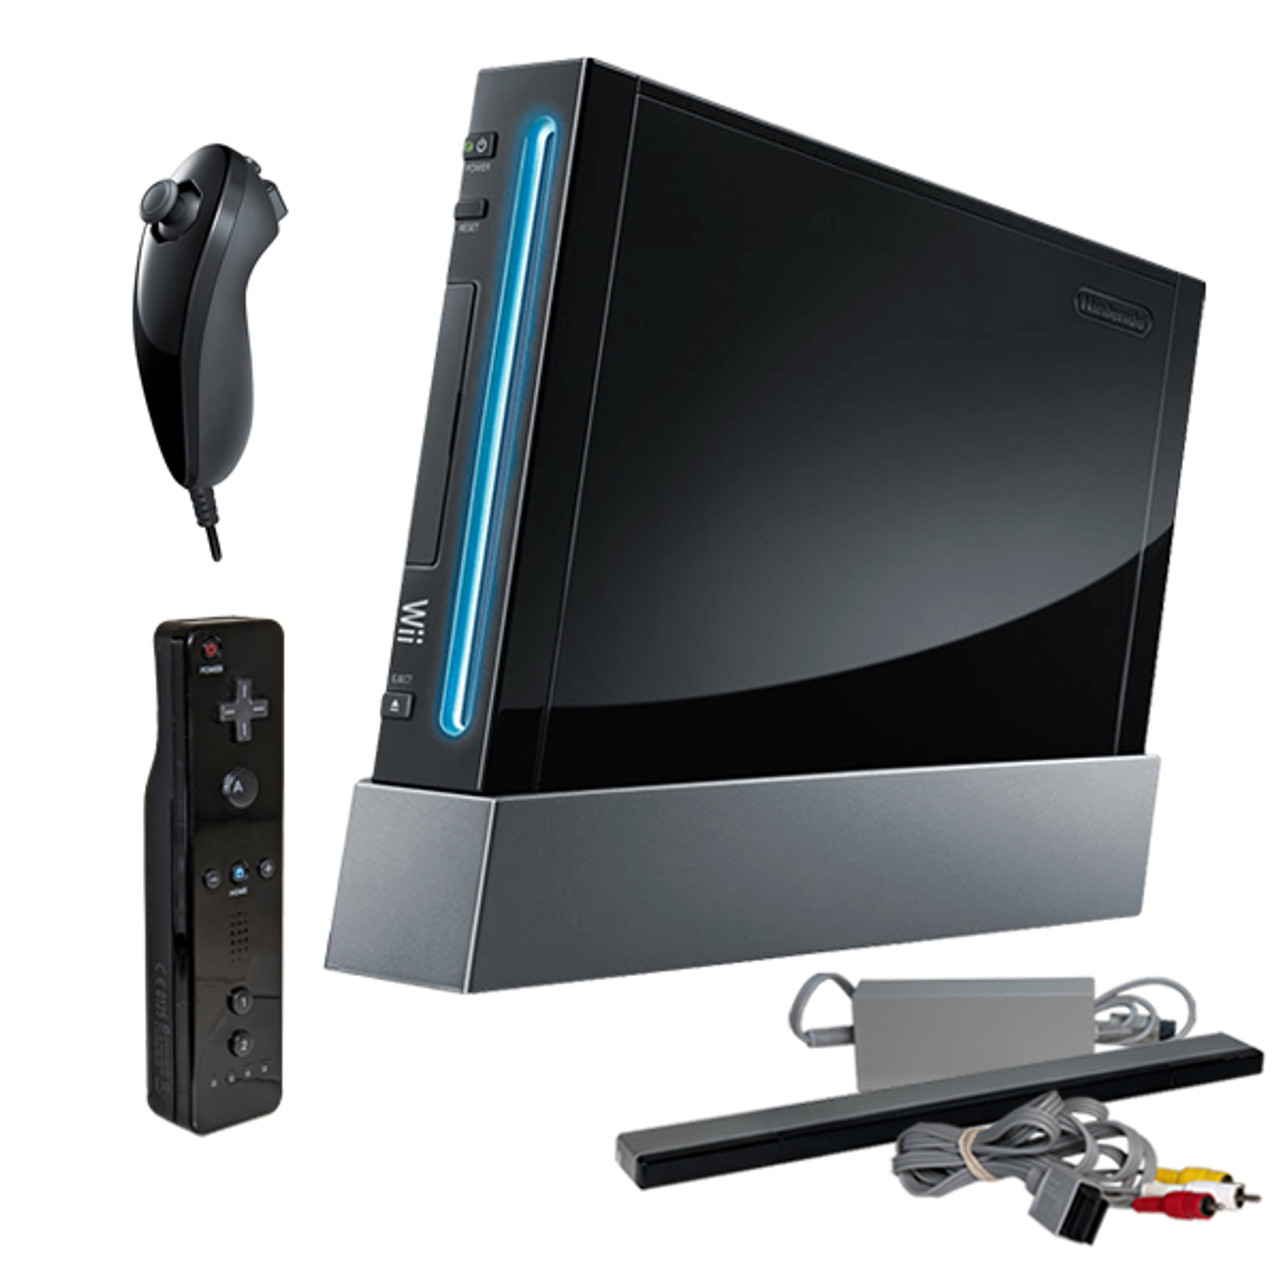 Nintendo Wii U 32GB Black System Player Pak For Sale